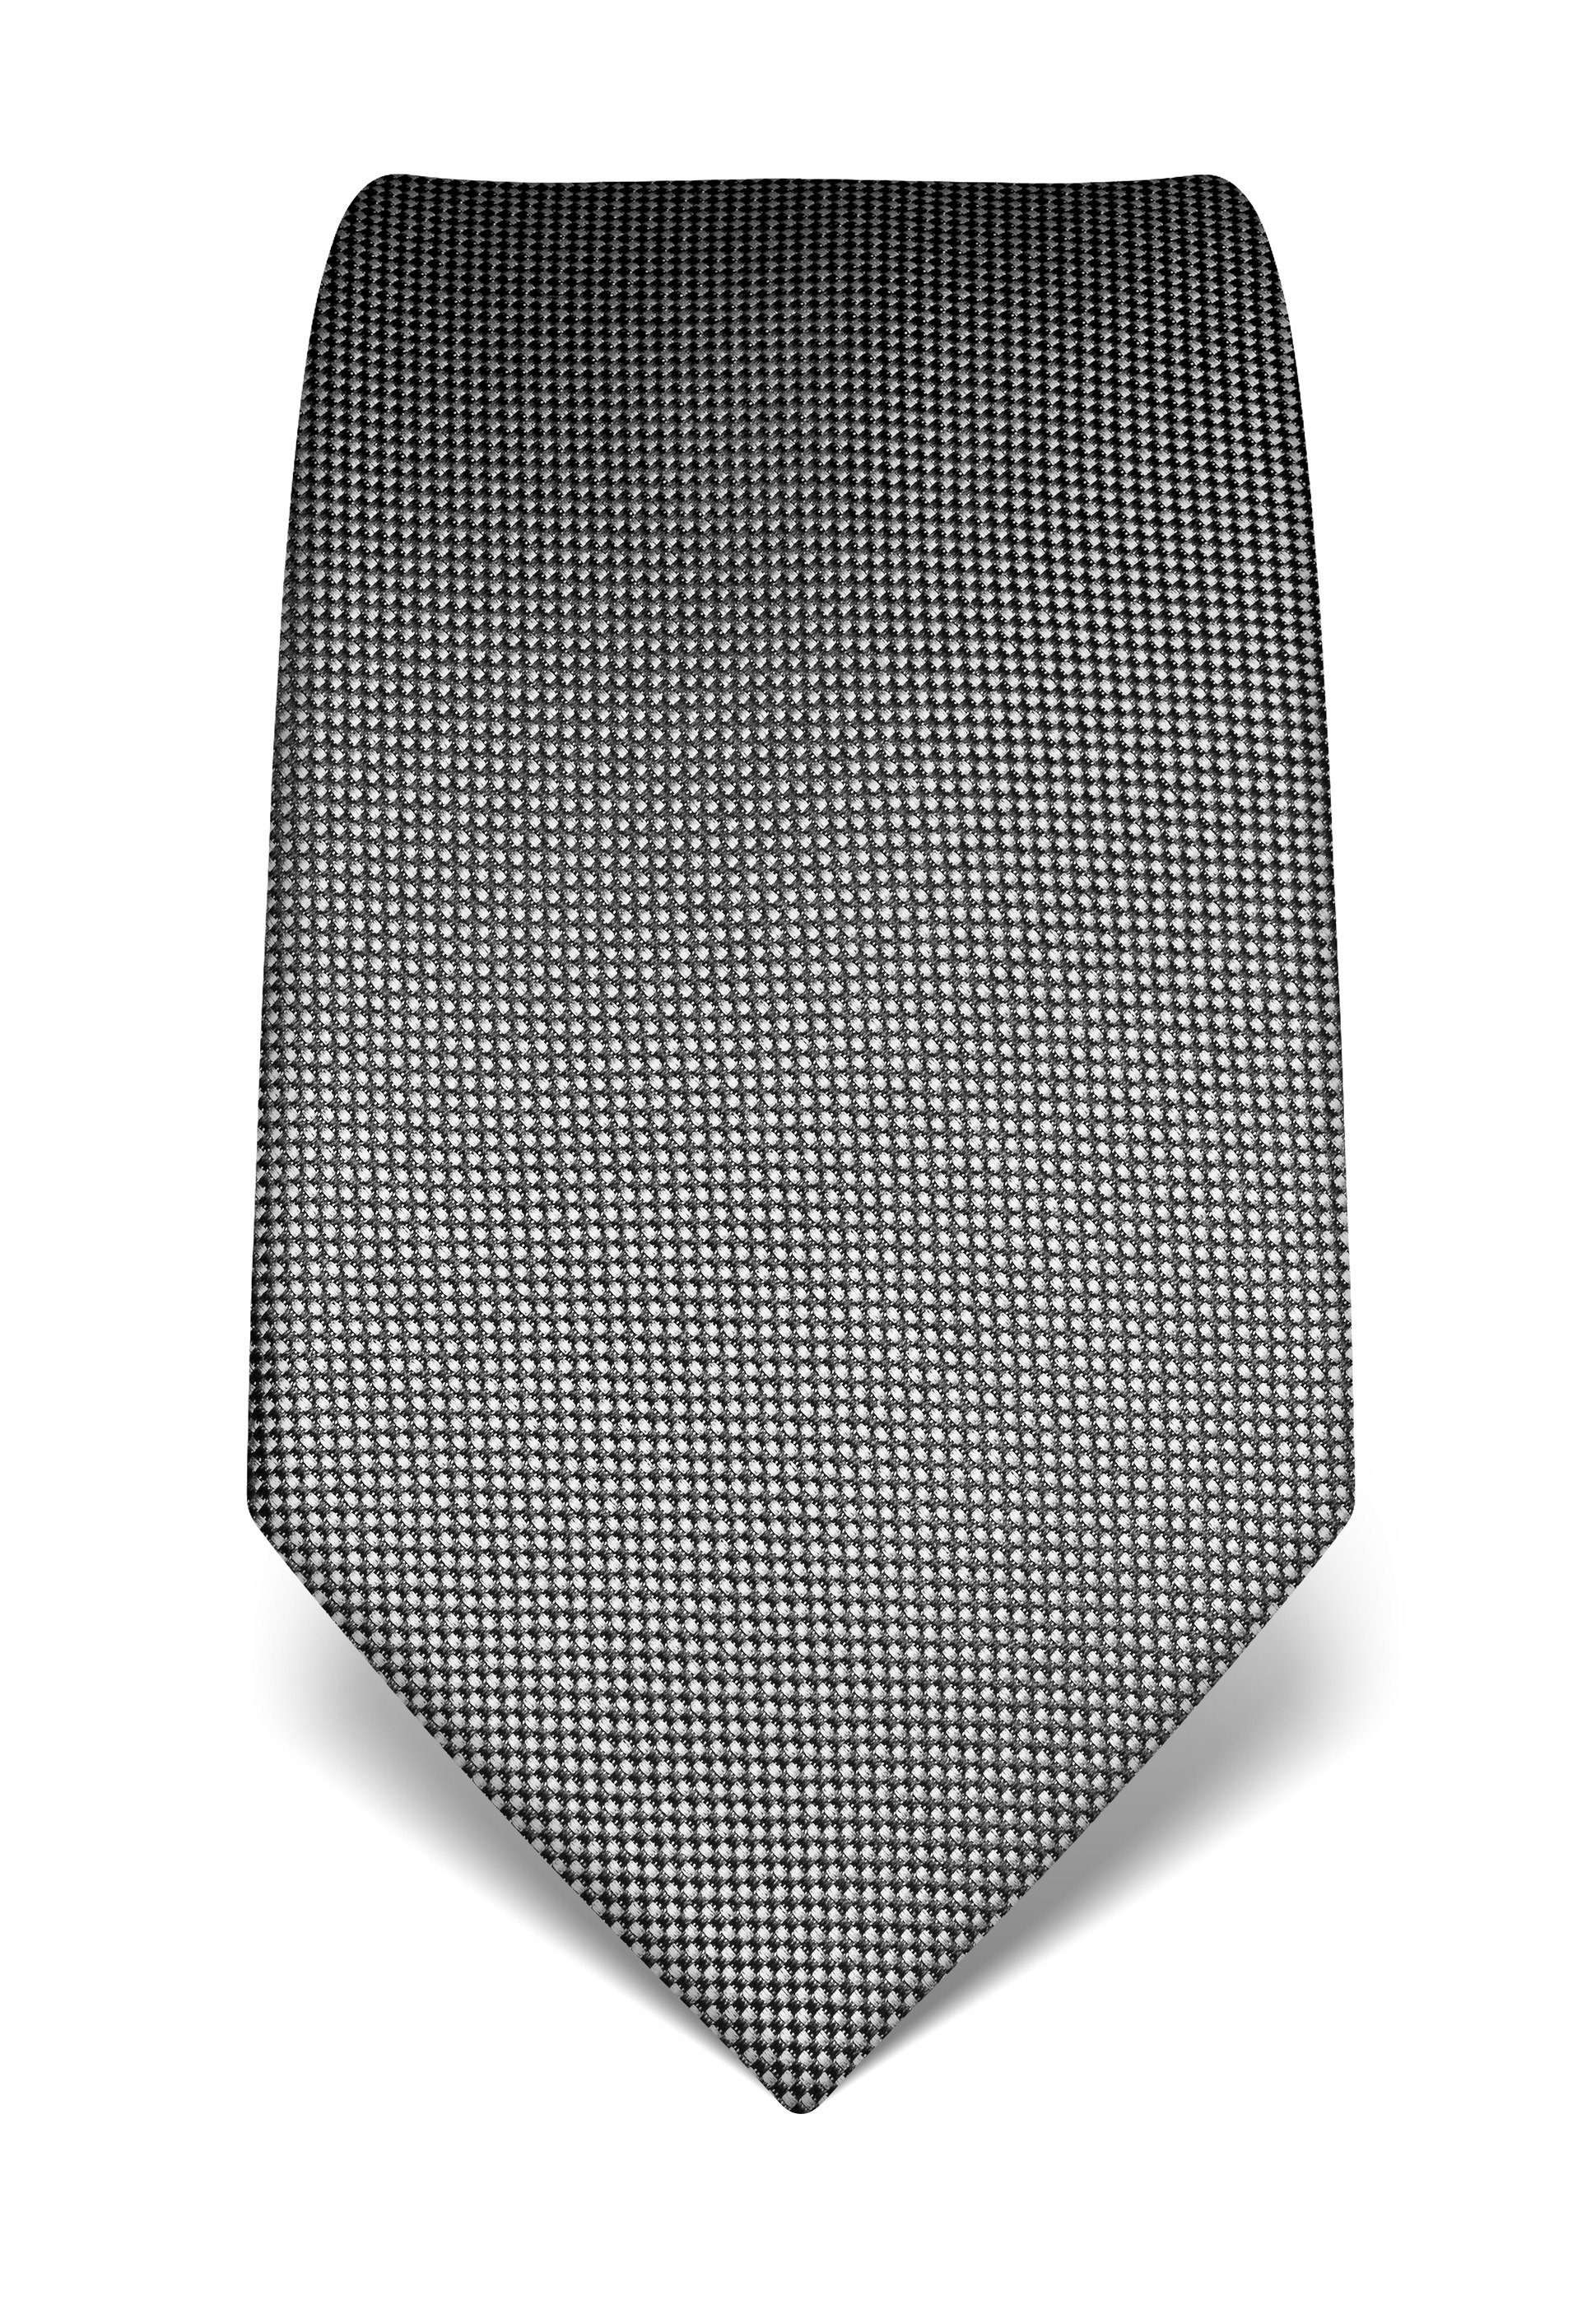 Krawatte Vincenzo anthrazit strukturiert Boretti